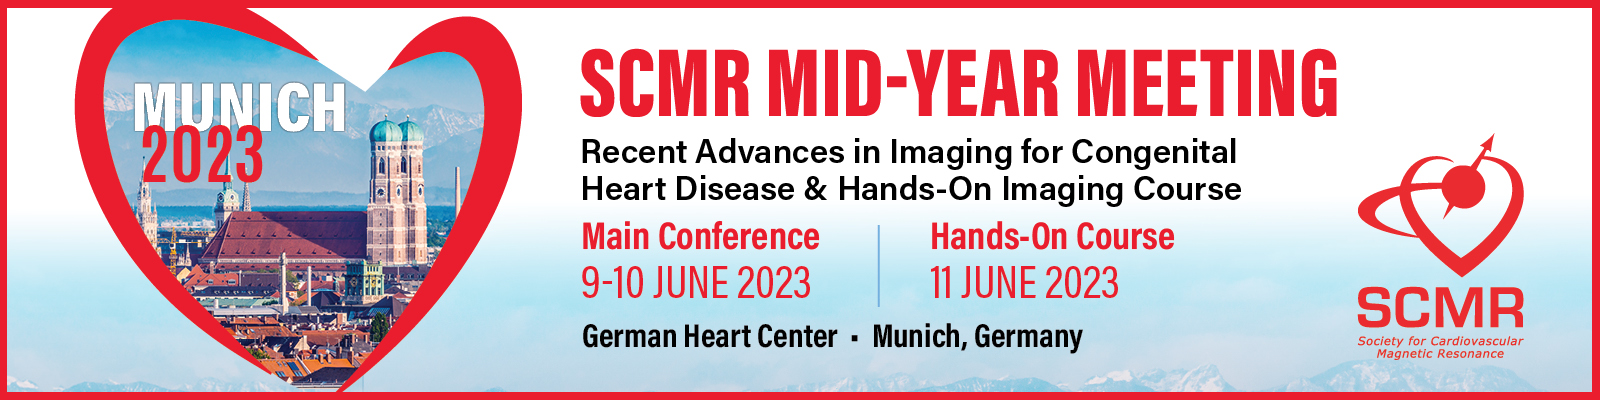 SCMR Mid-Year Meeting